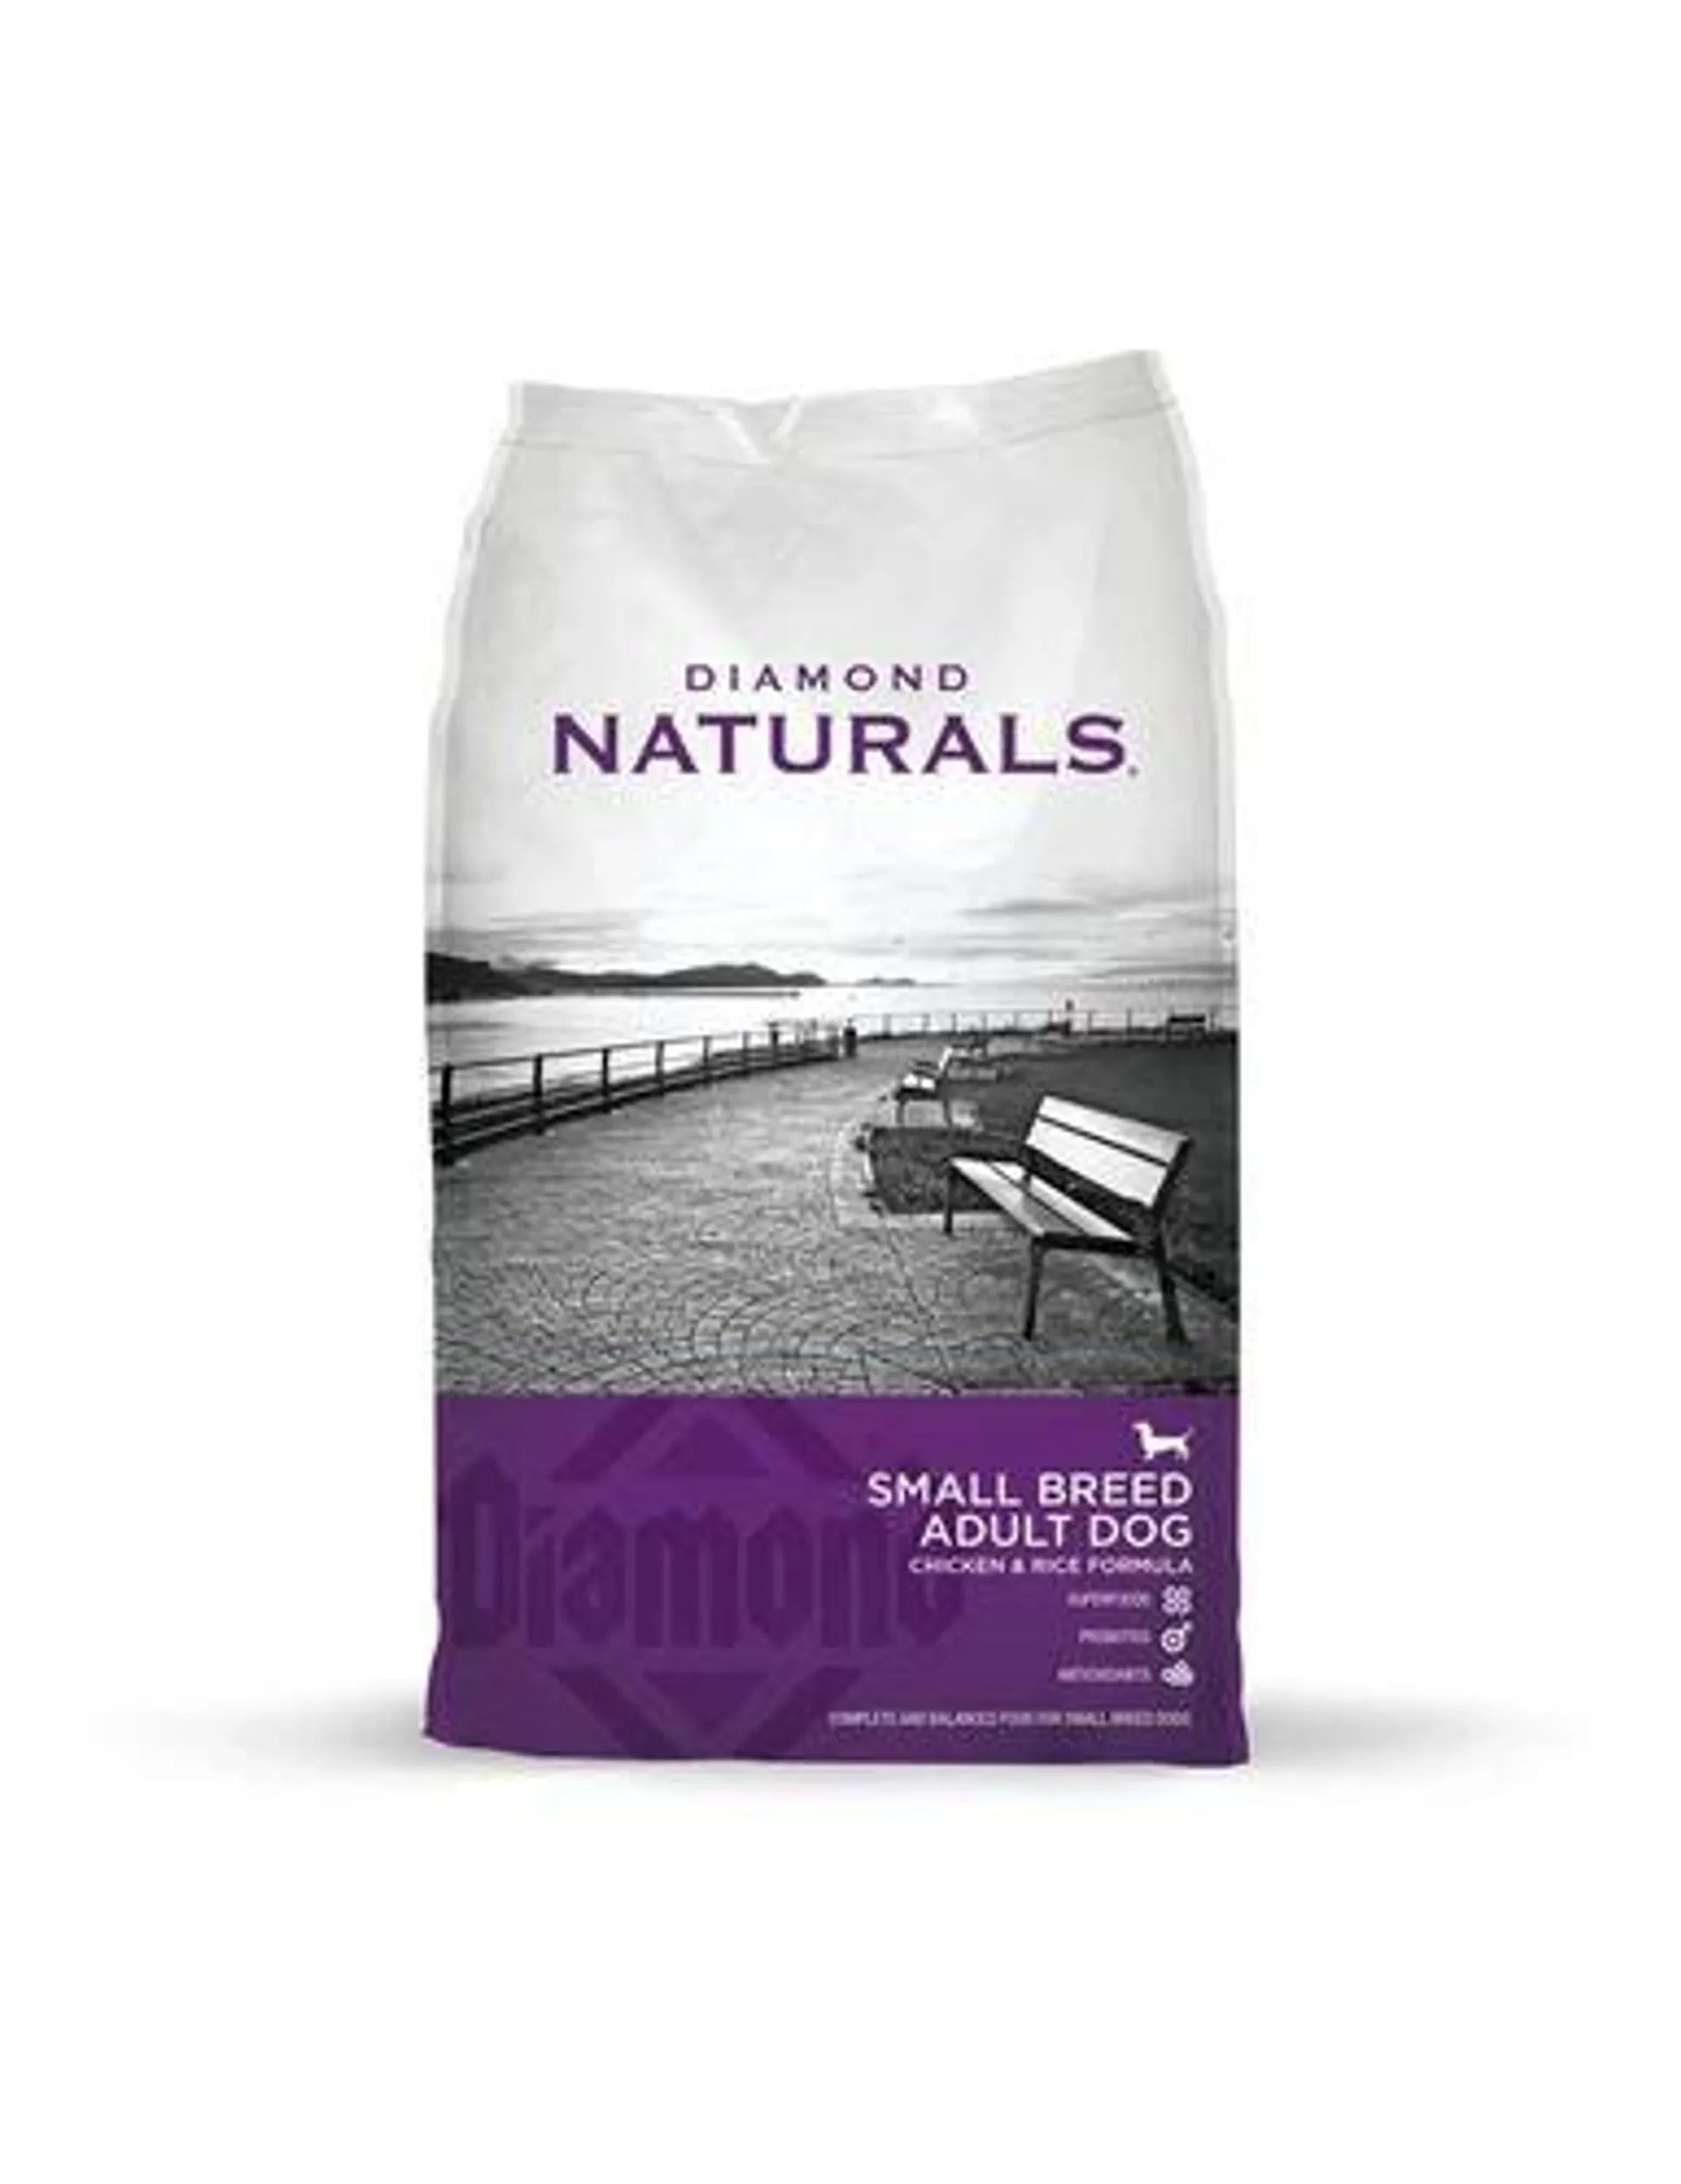 Diamond Naturals Small Breed Adult Dog Chicken & Rice Formula, 18 pound bag